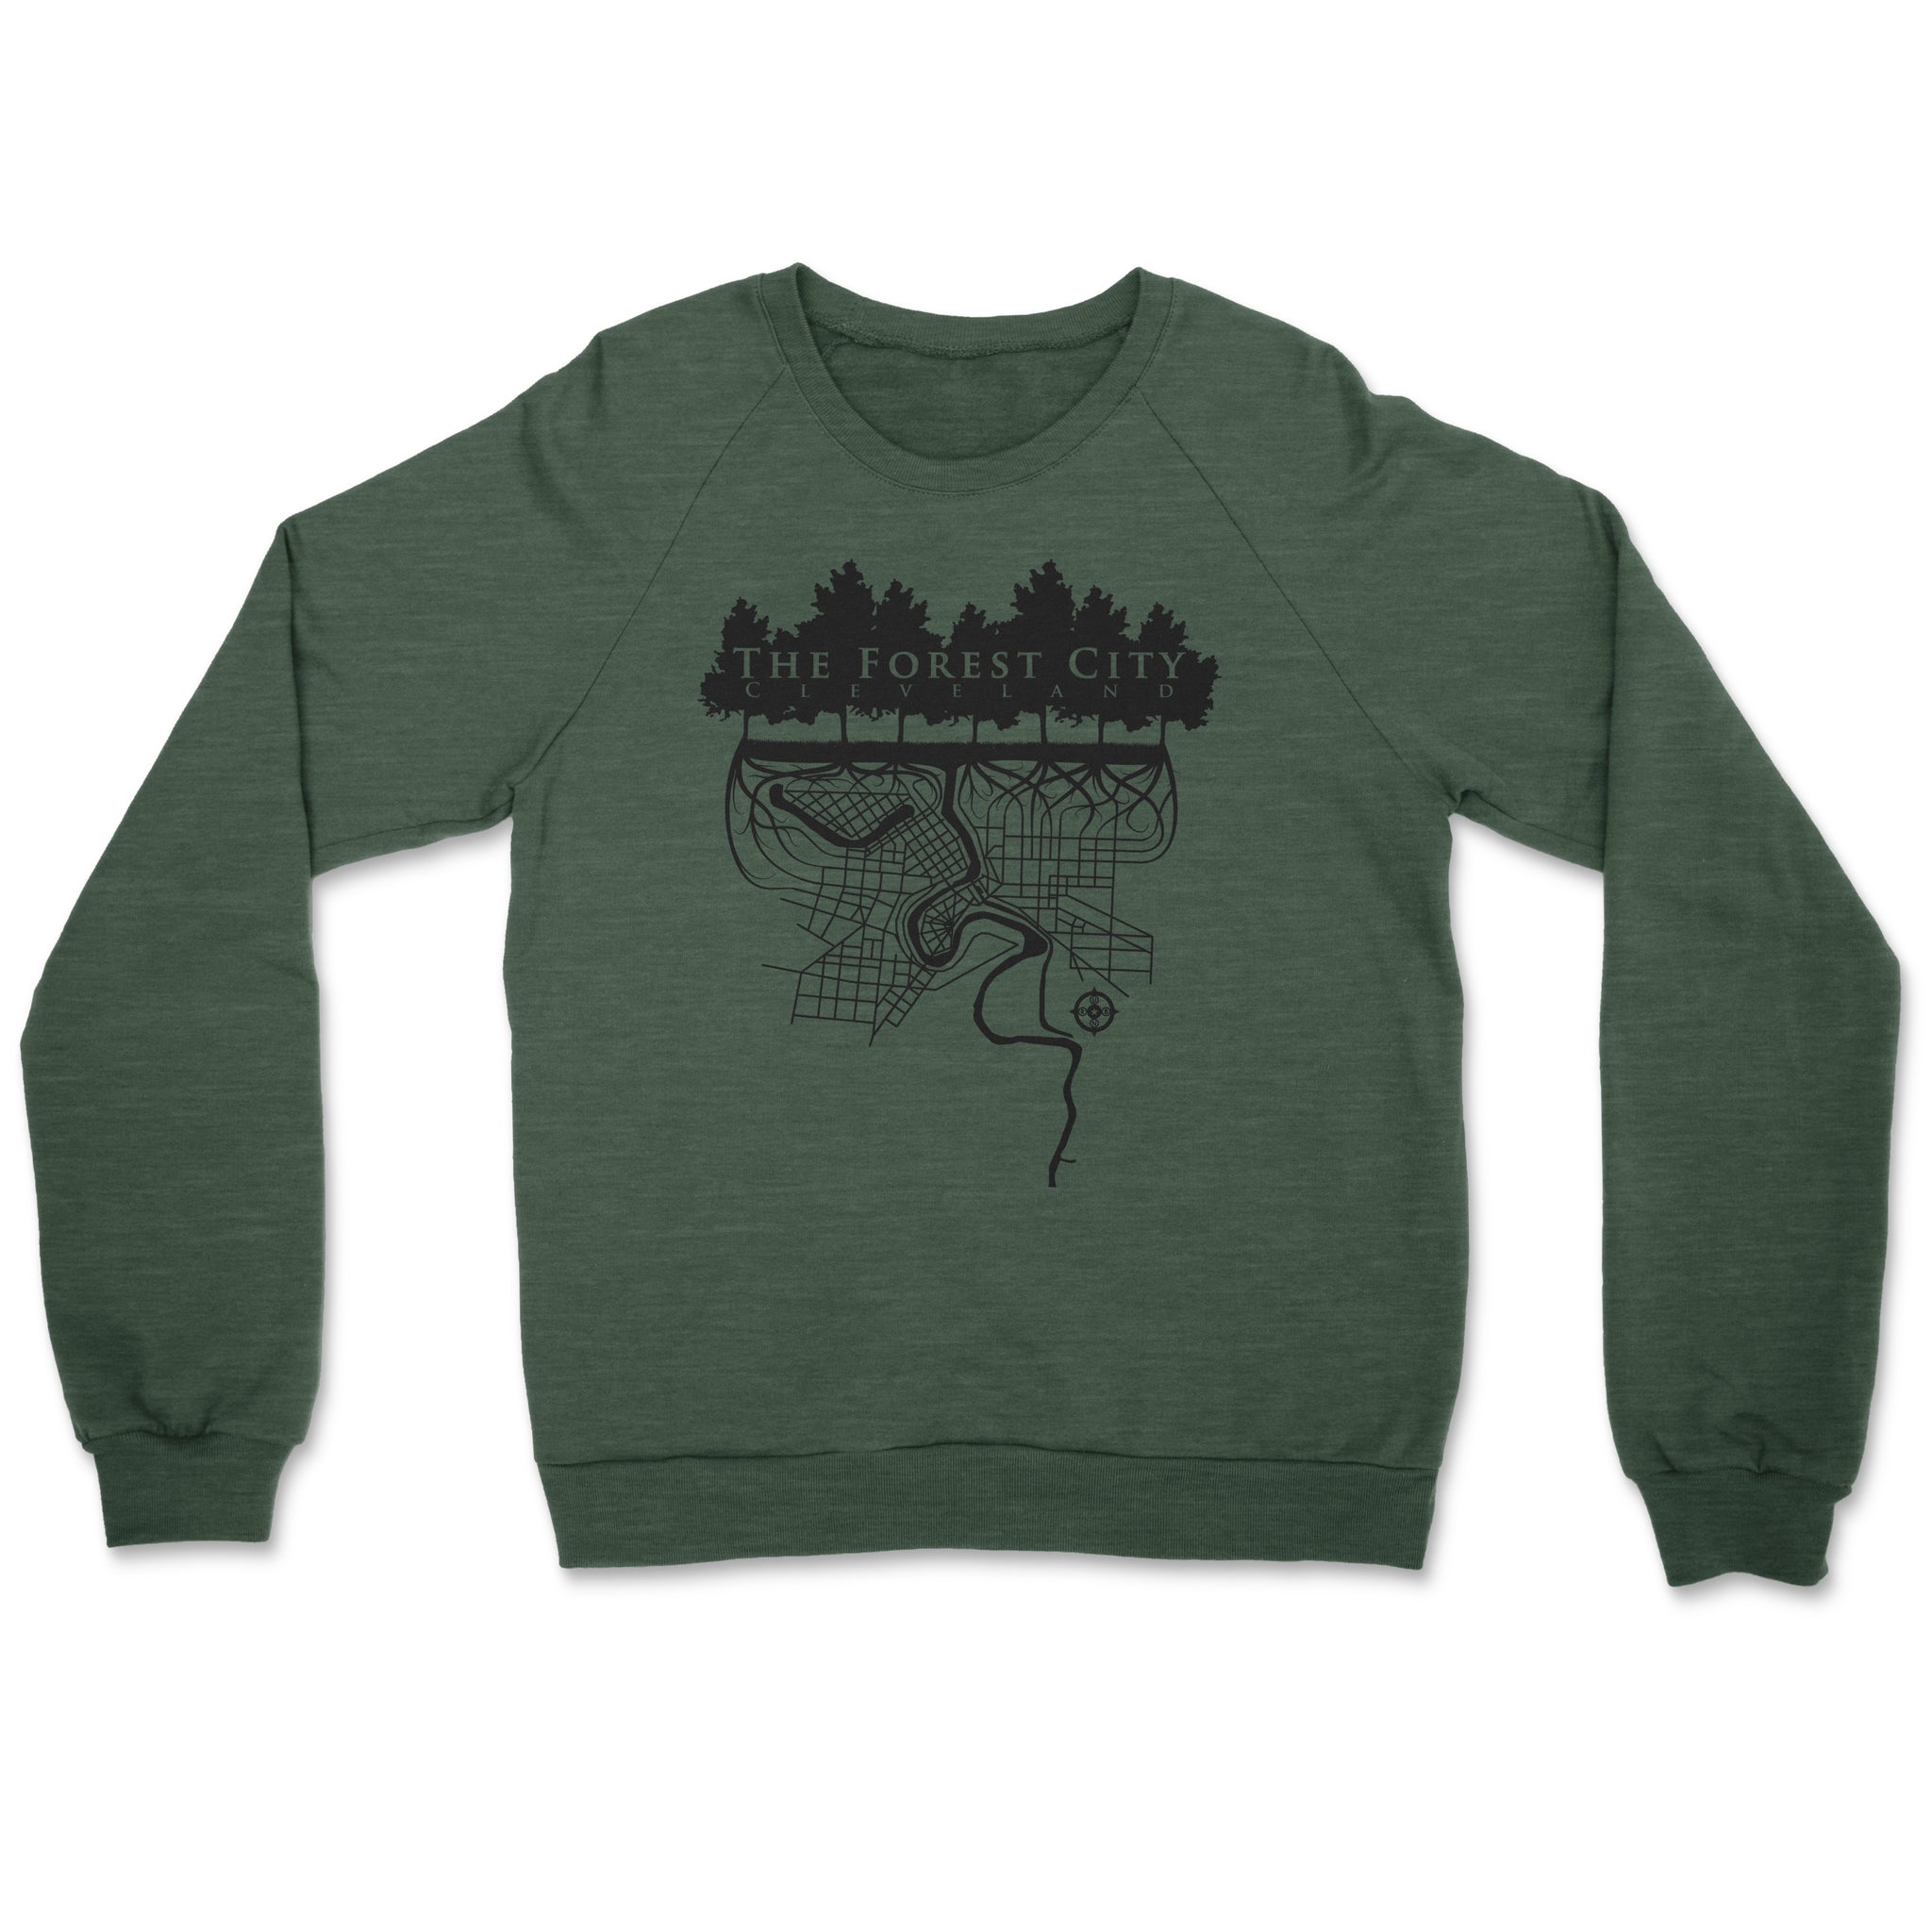 The Forest City Sweatshirt (Men's/Unisex)